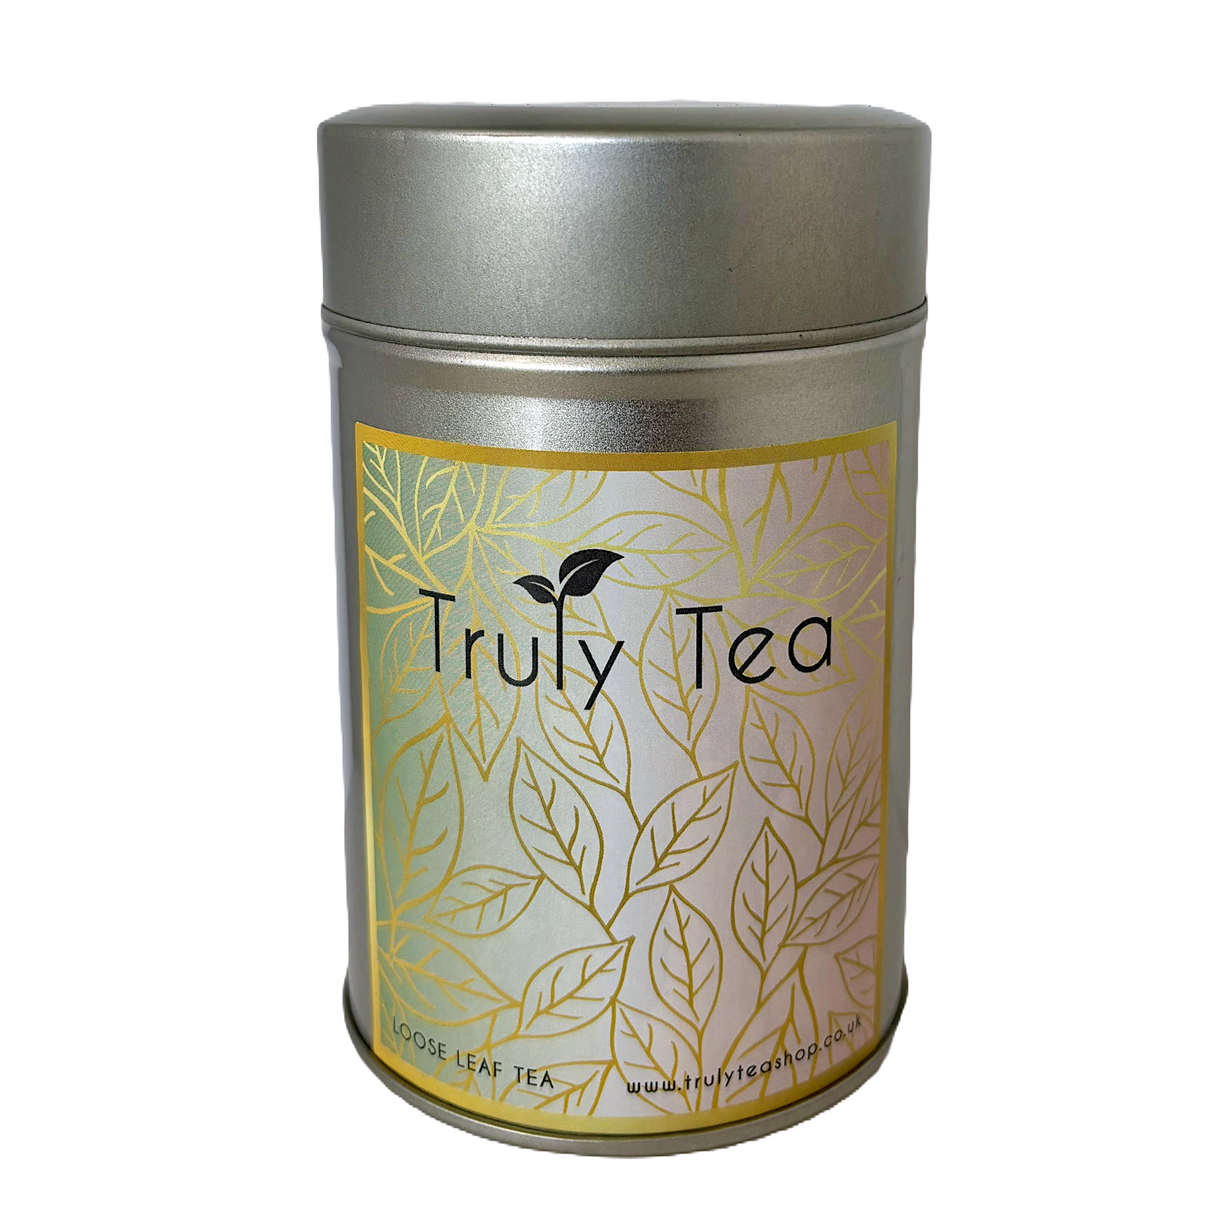 Osmanthus scented green tea